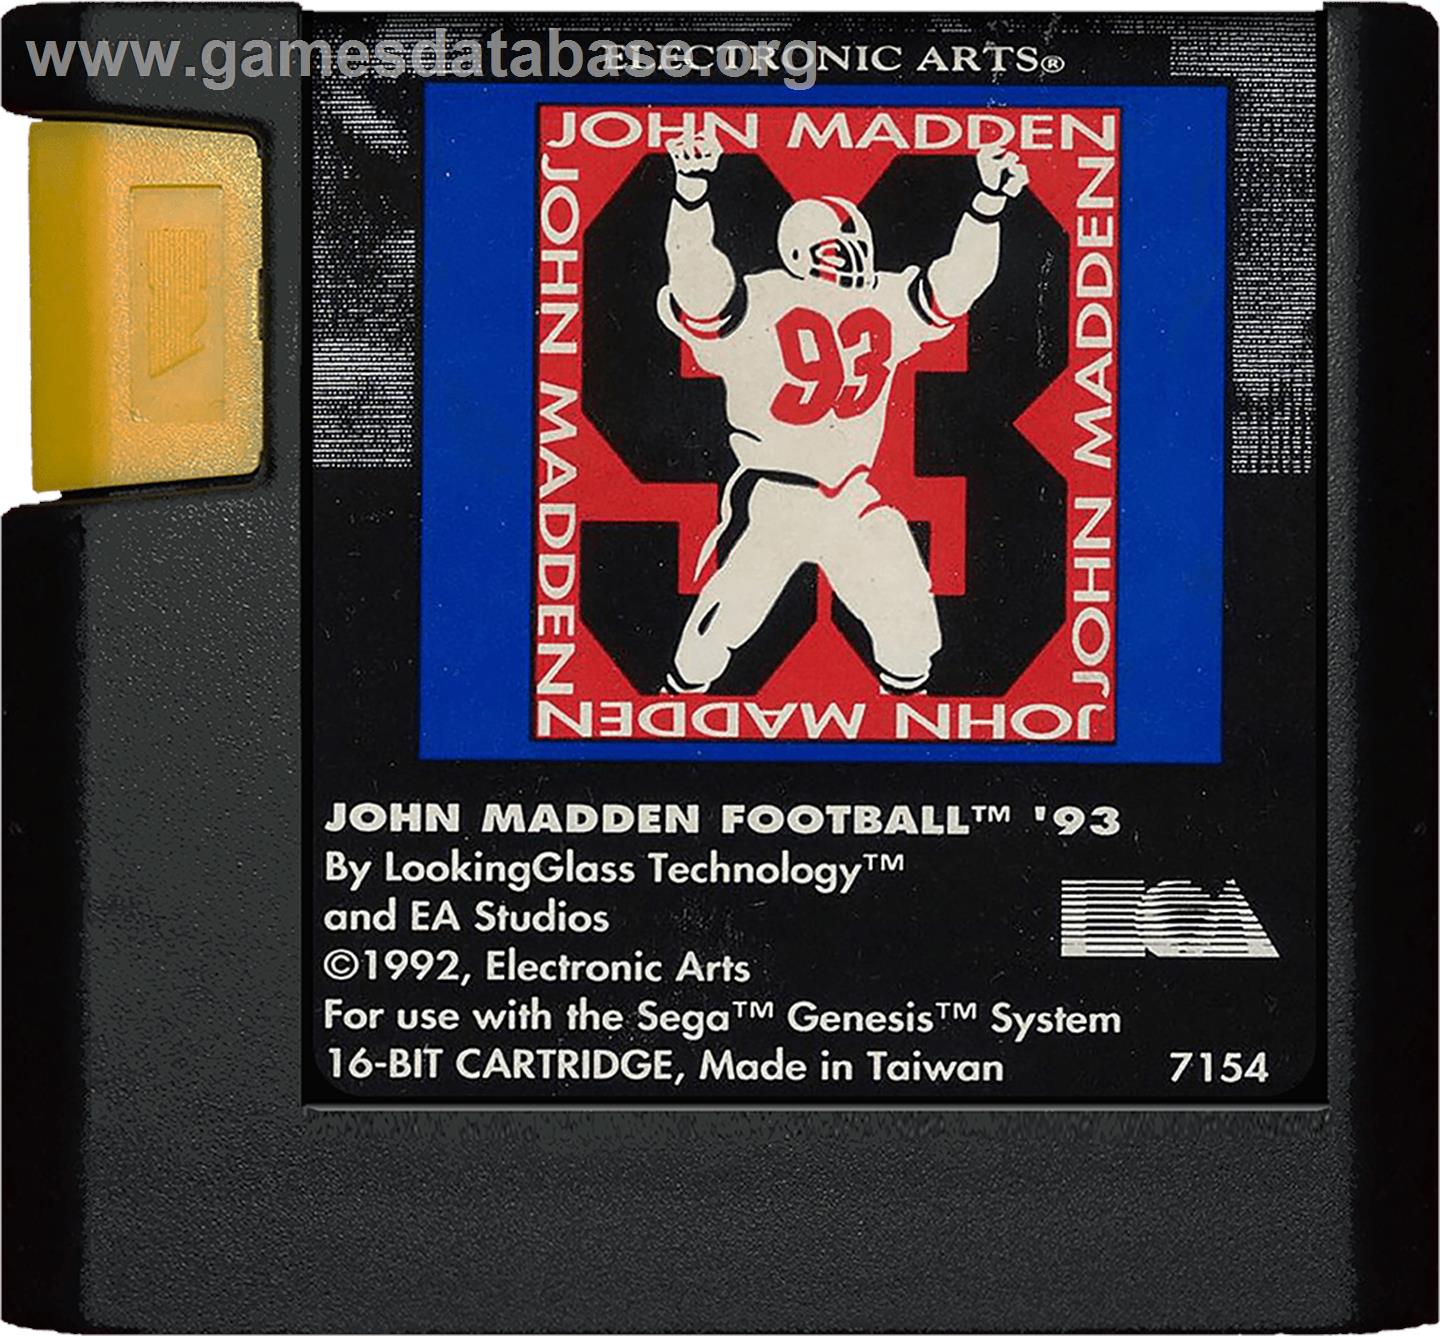 John Madden Football '93 - Sega Genesis - Artwork - Cartridge